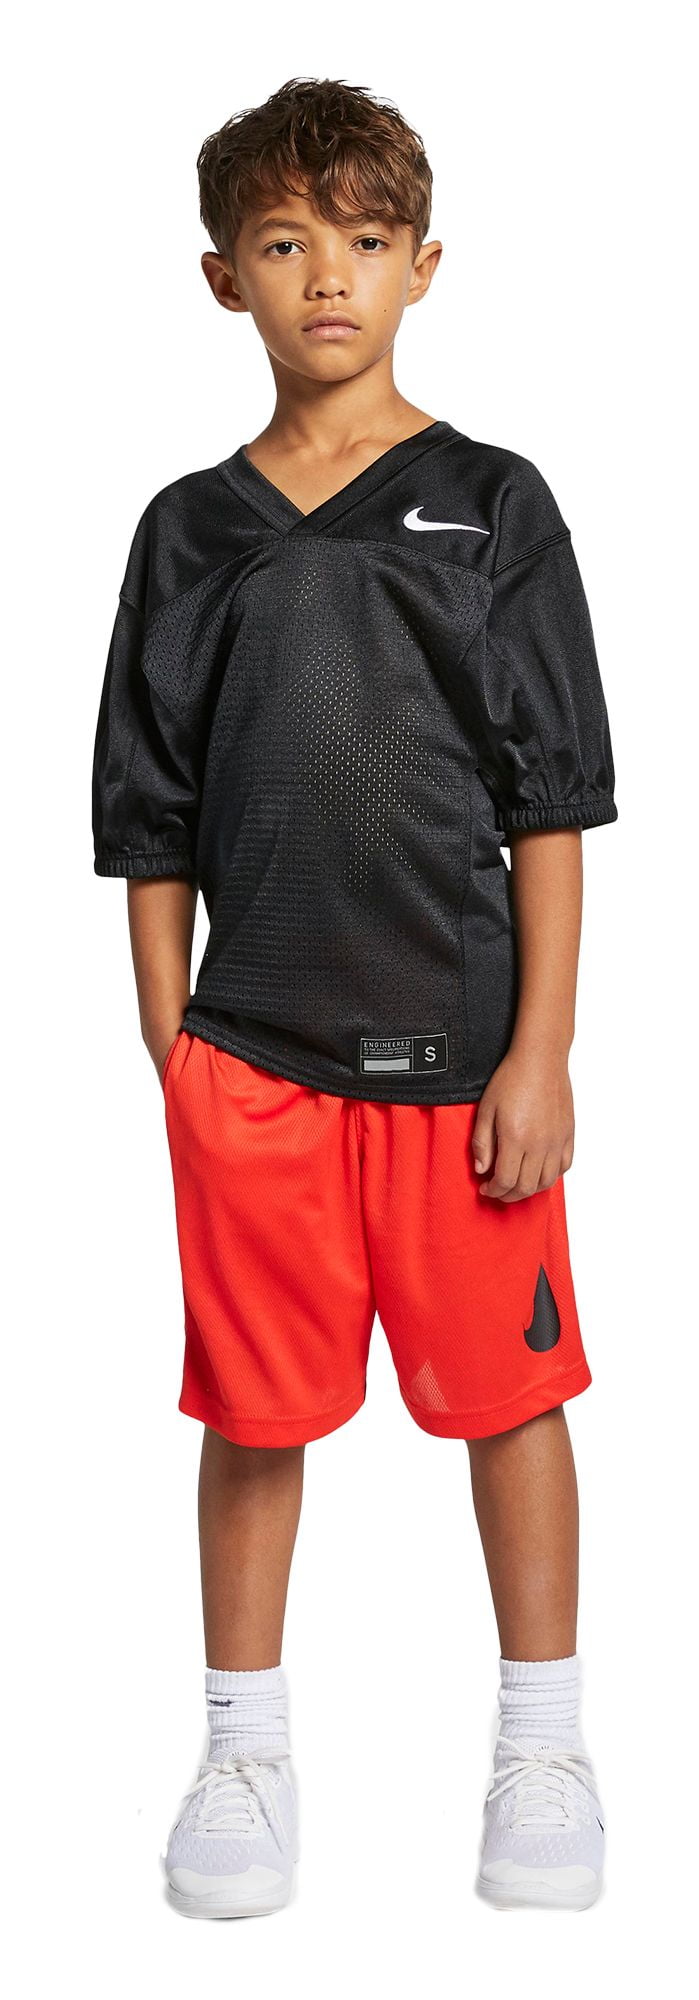 Nike Practice Big Kids' (Boys') Football Jersey.